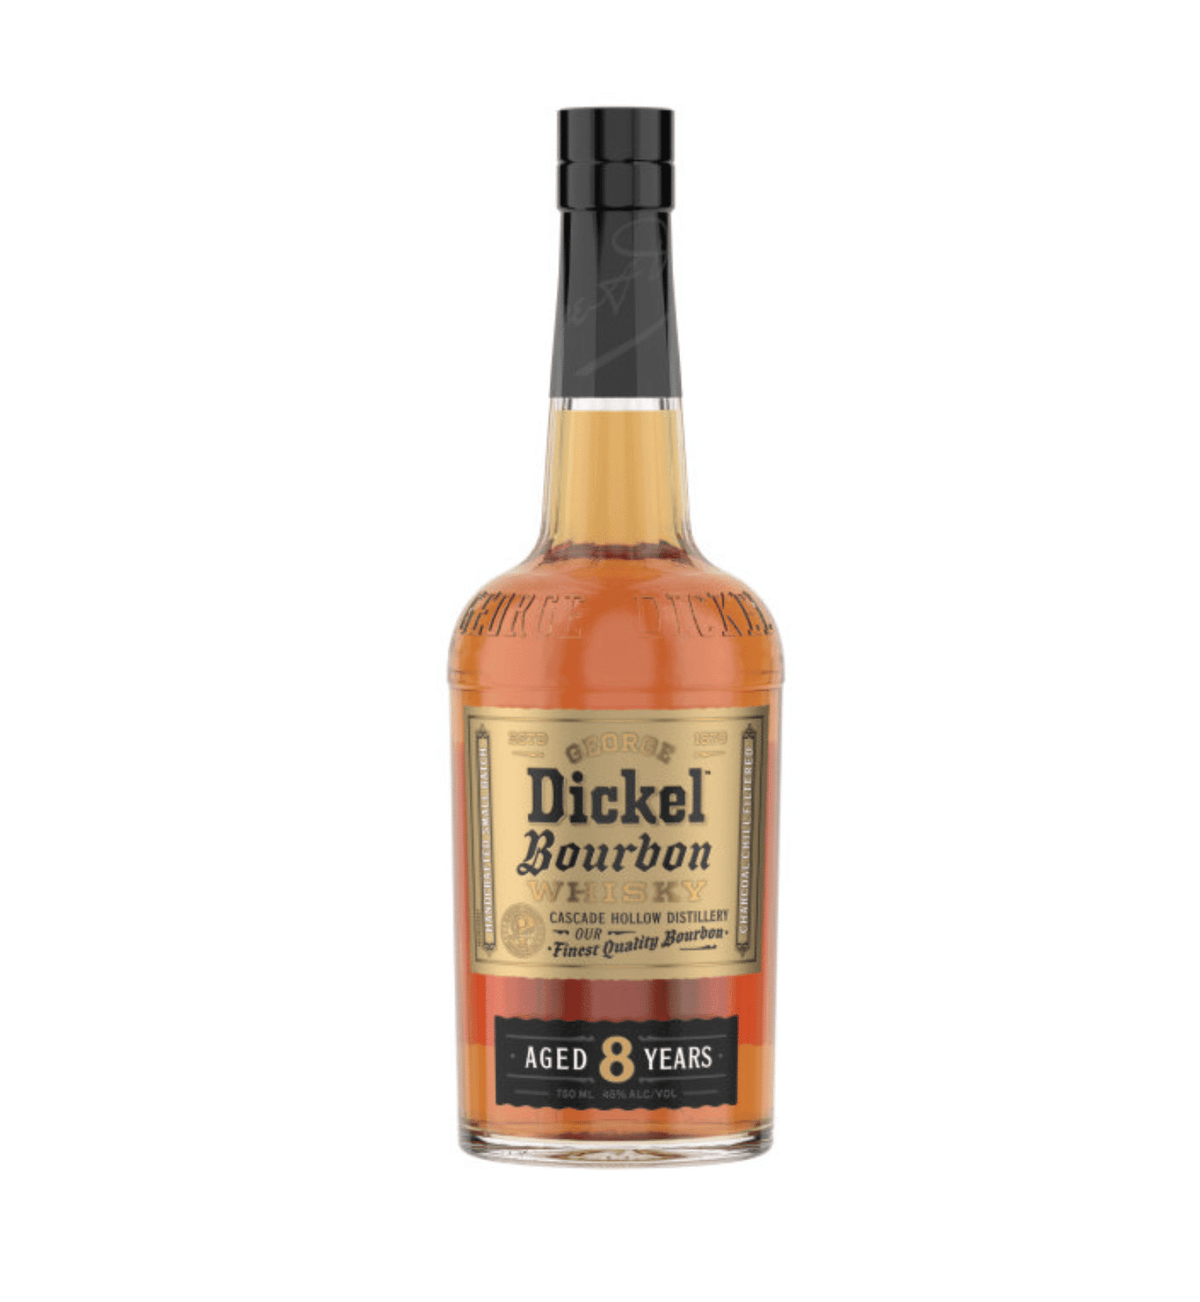 George Dickel Bourbon Whisky Aged 8 Years - Barbank